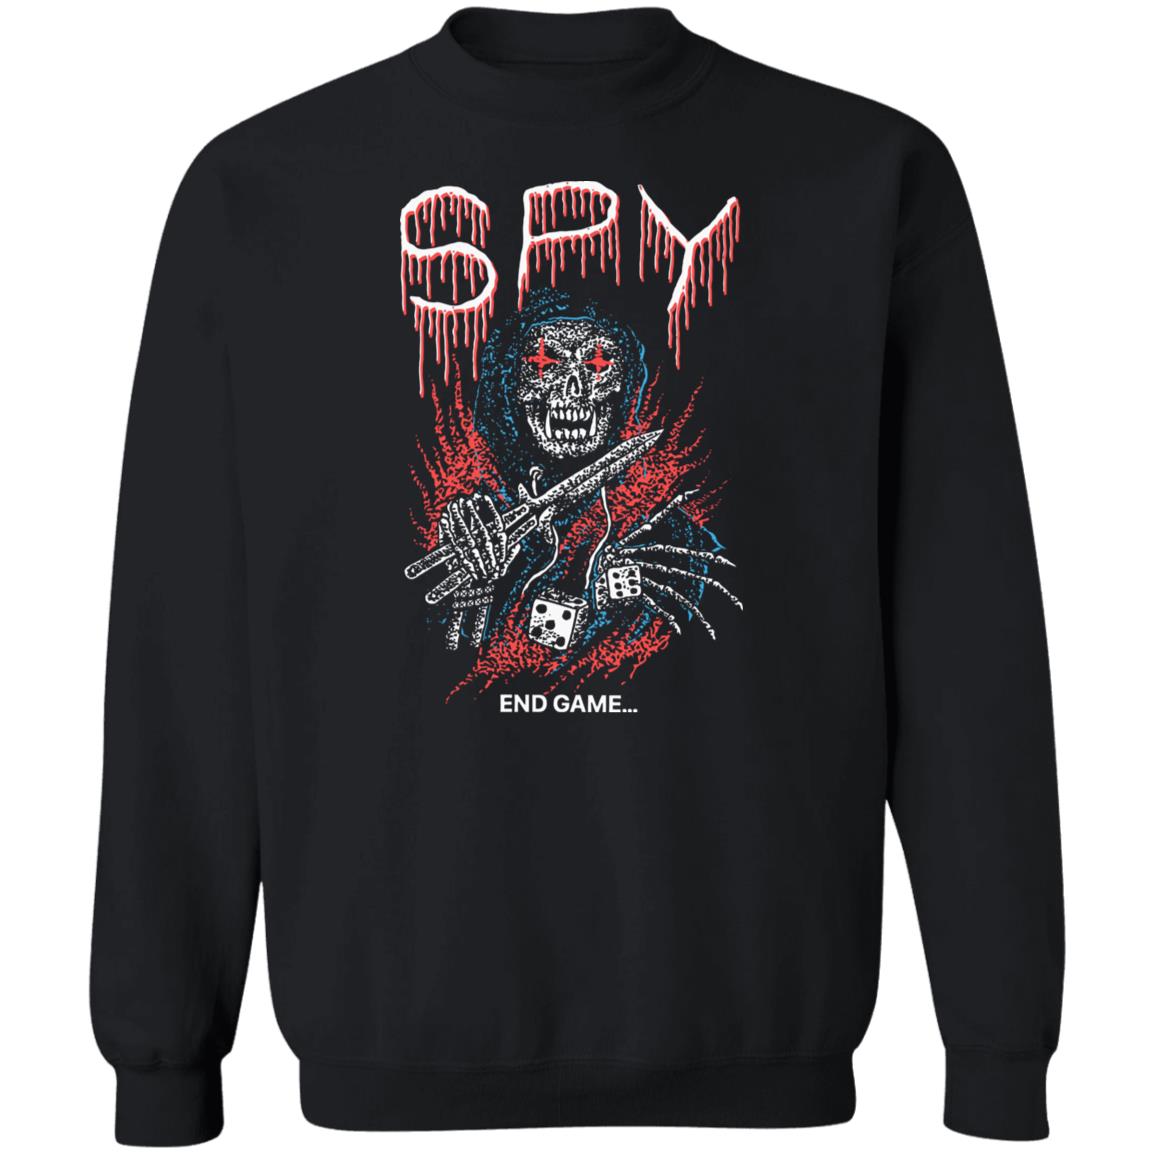 Spy End Game Shirt 2